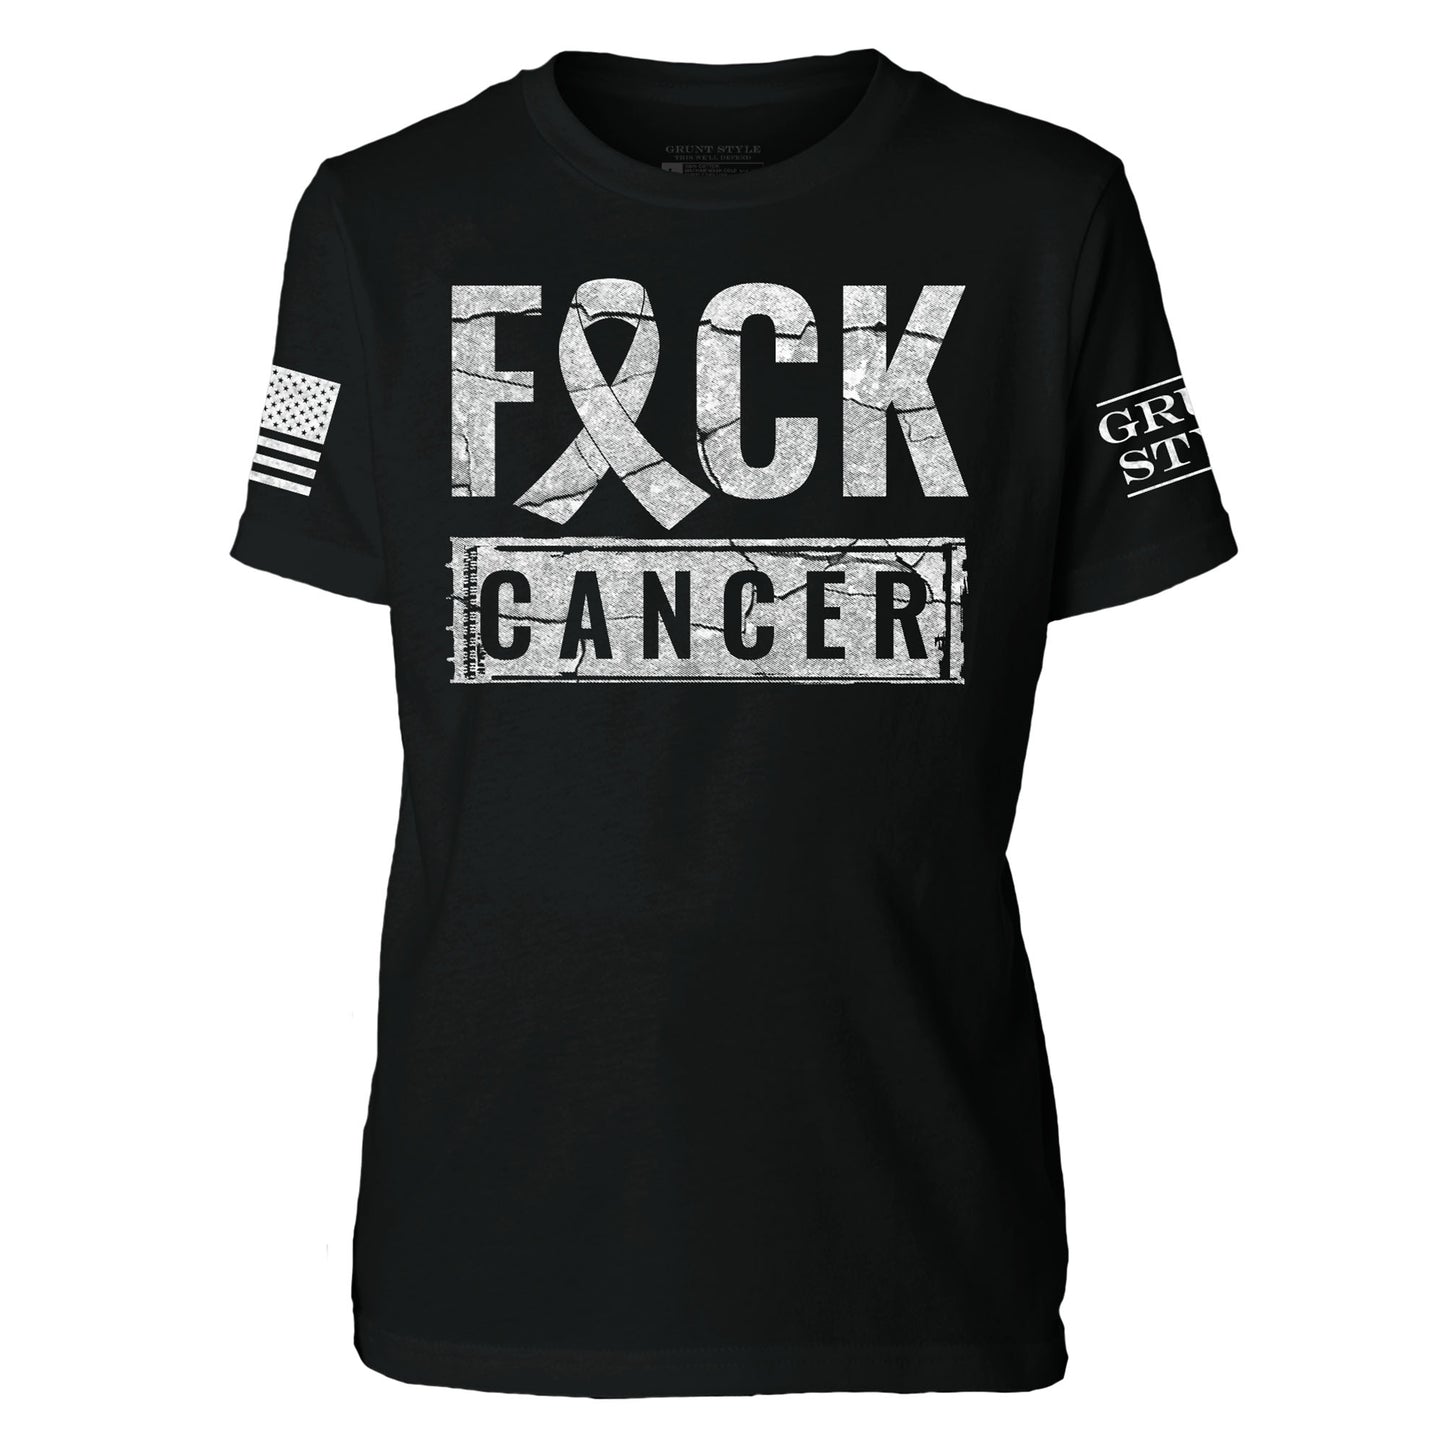 Cancer Awareness Shirt for Kids 